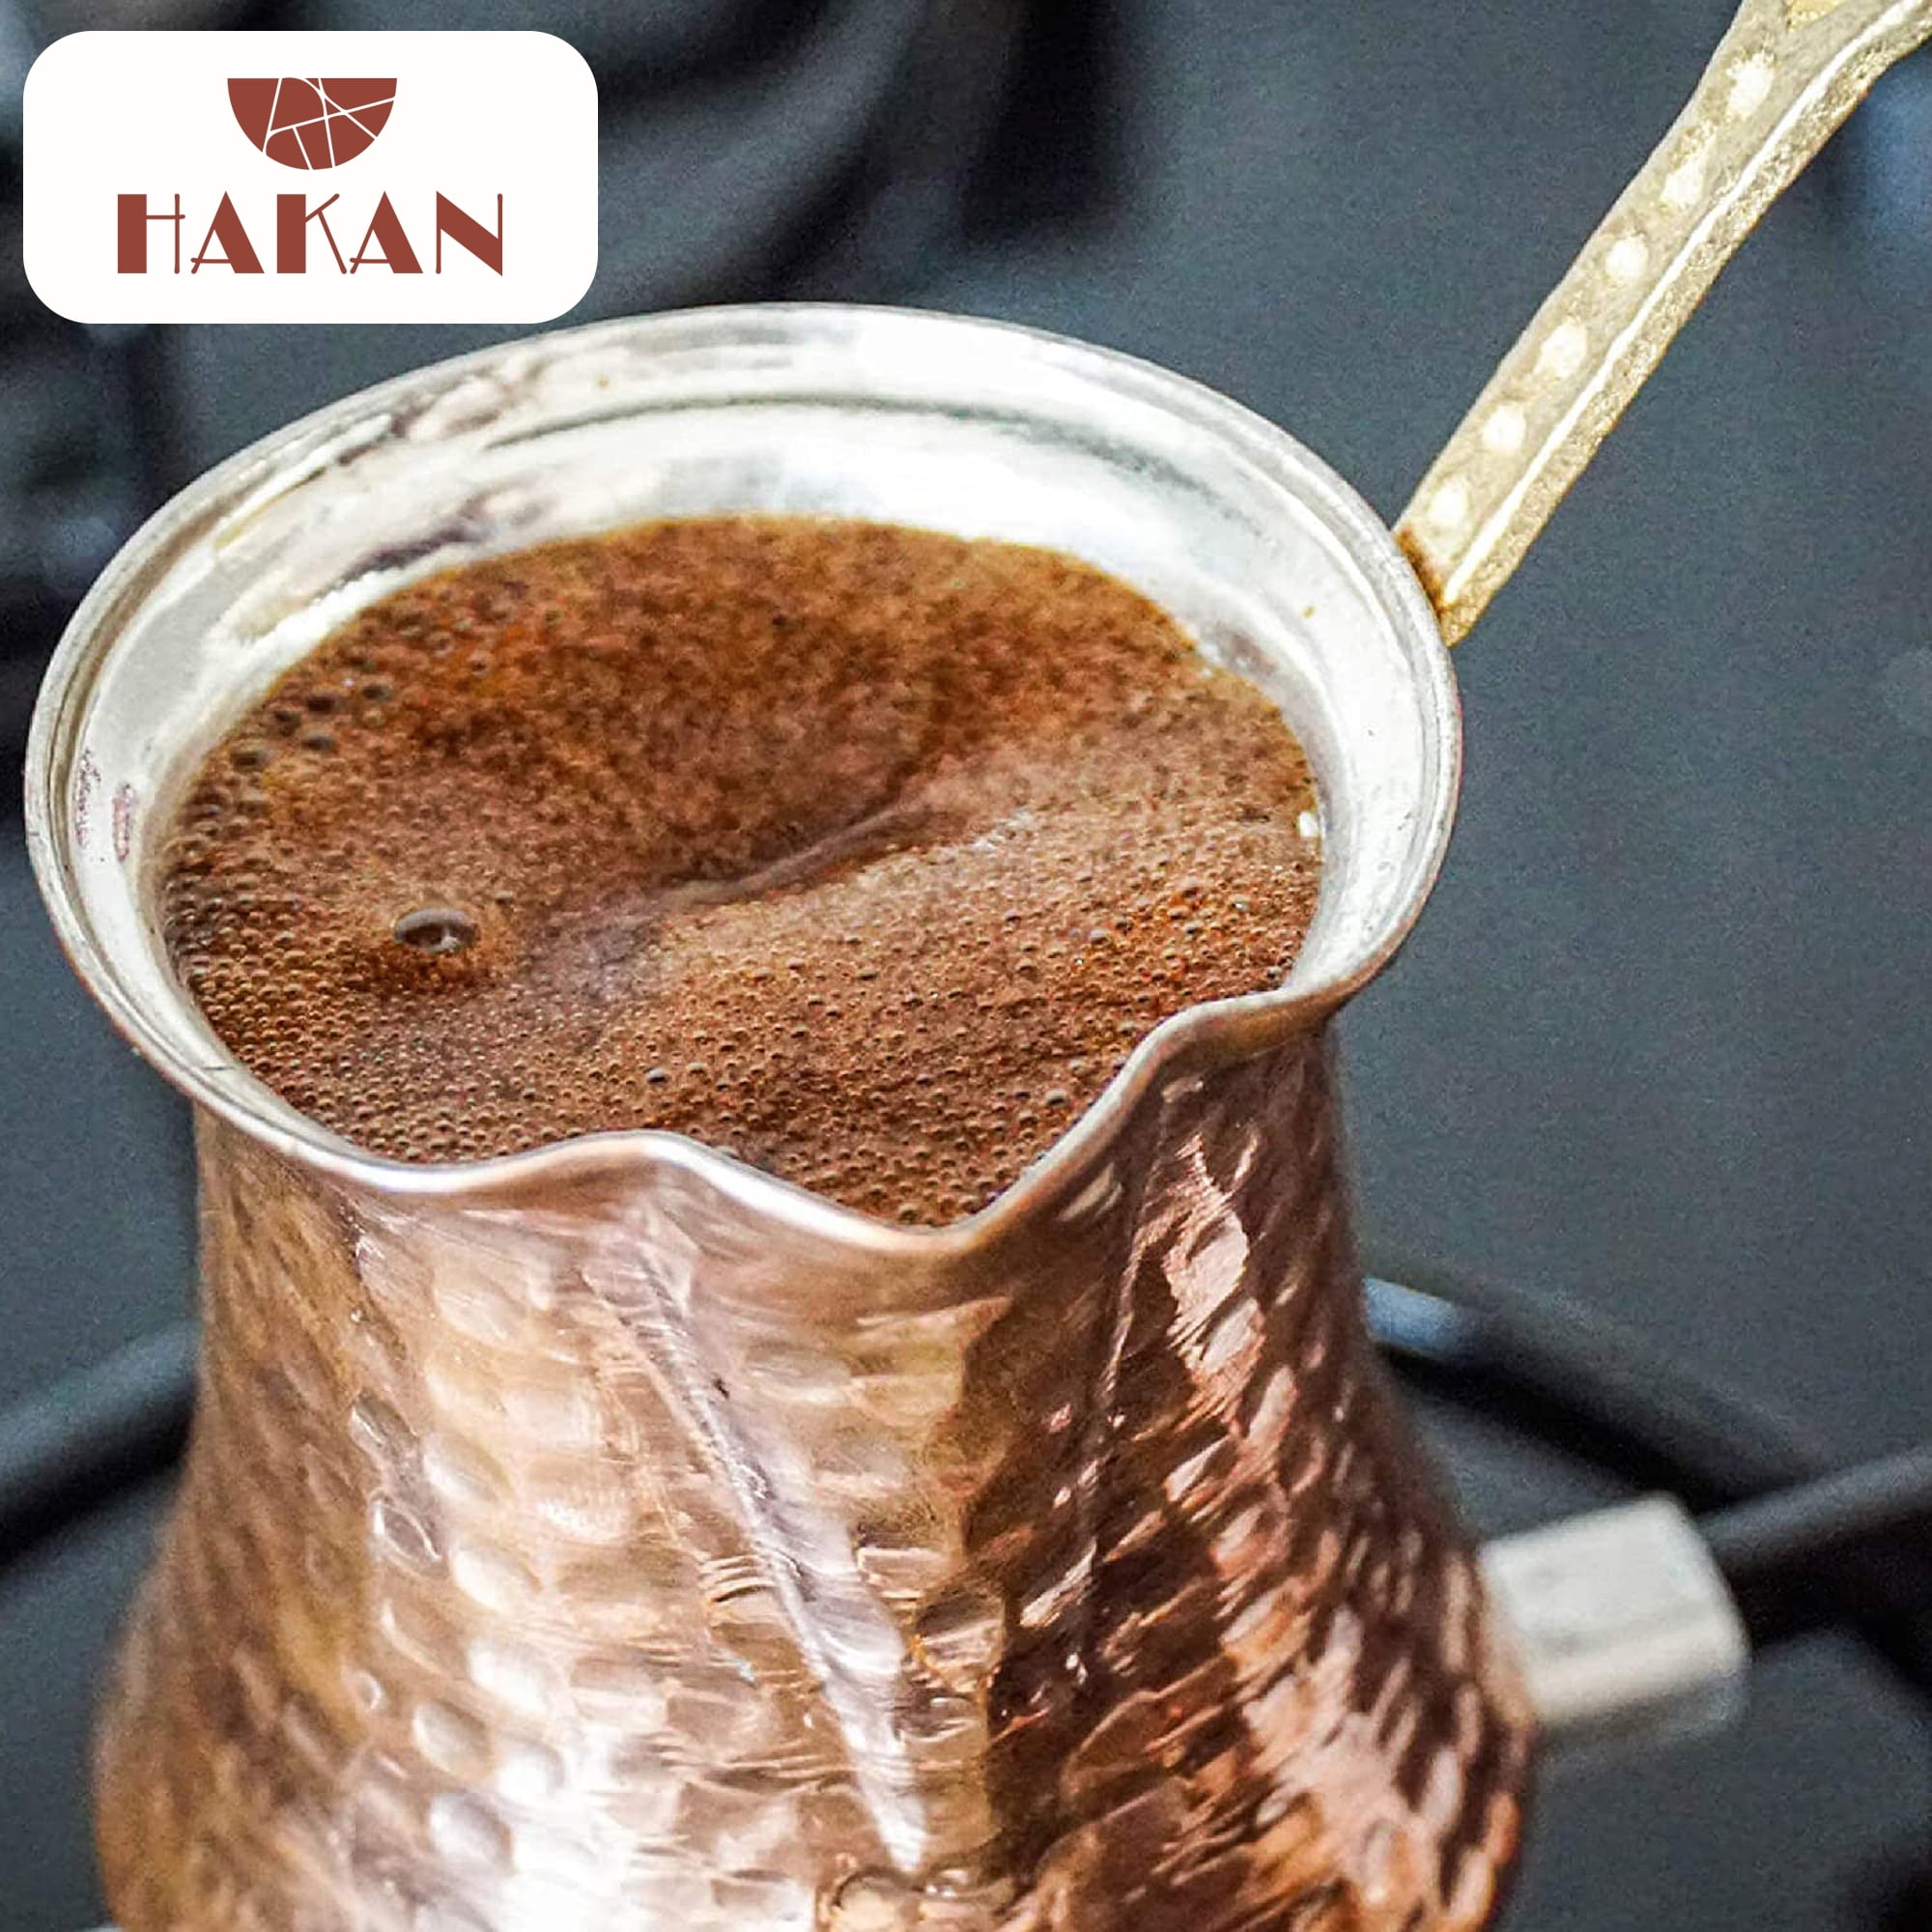 Middle Eastern Cordless Coffee Maker - 6 Cup (Ghahve Joosh) – Kalamala